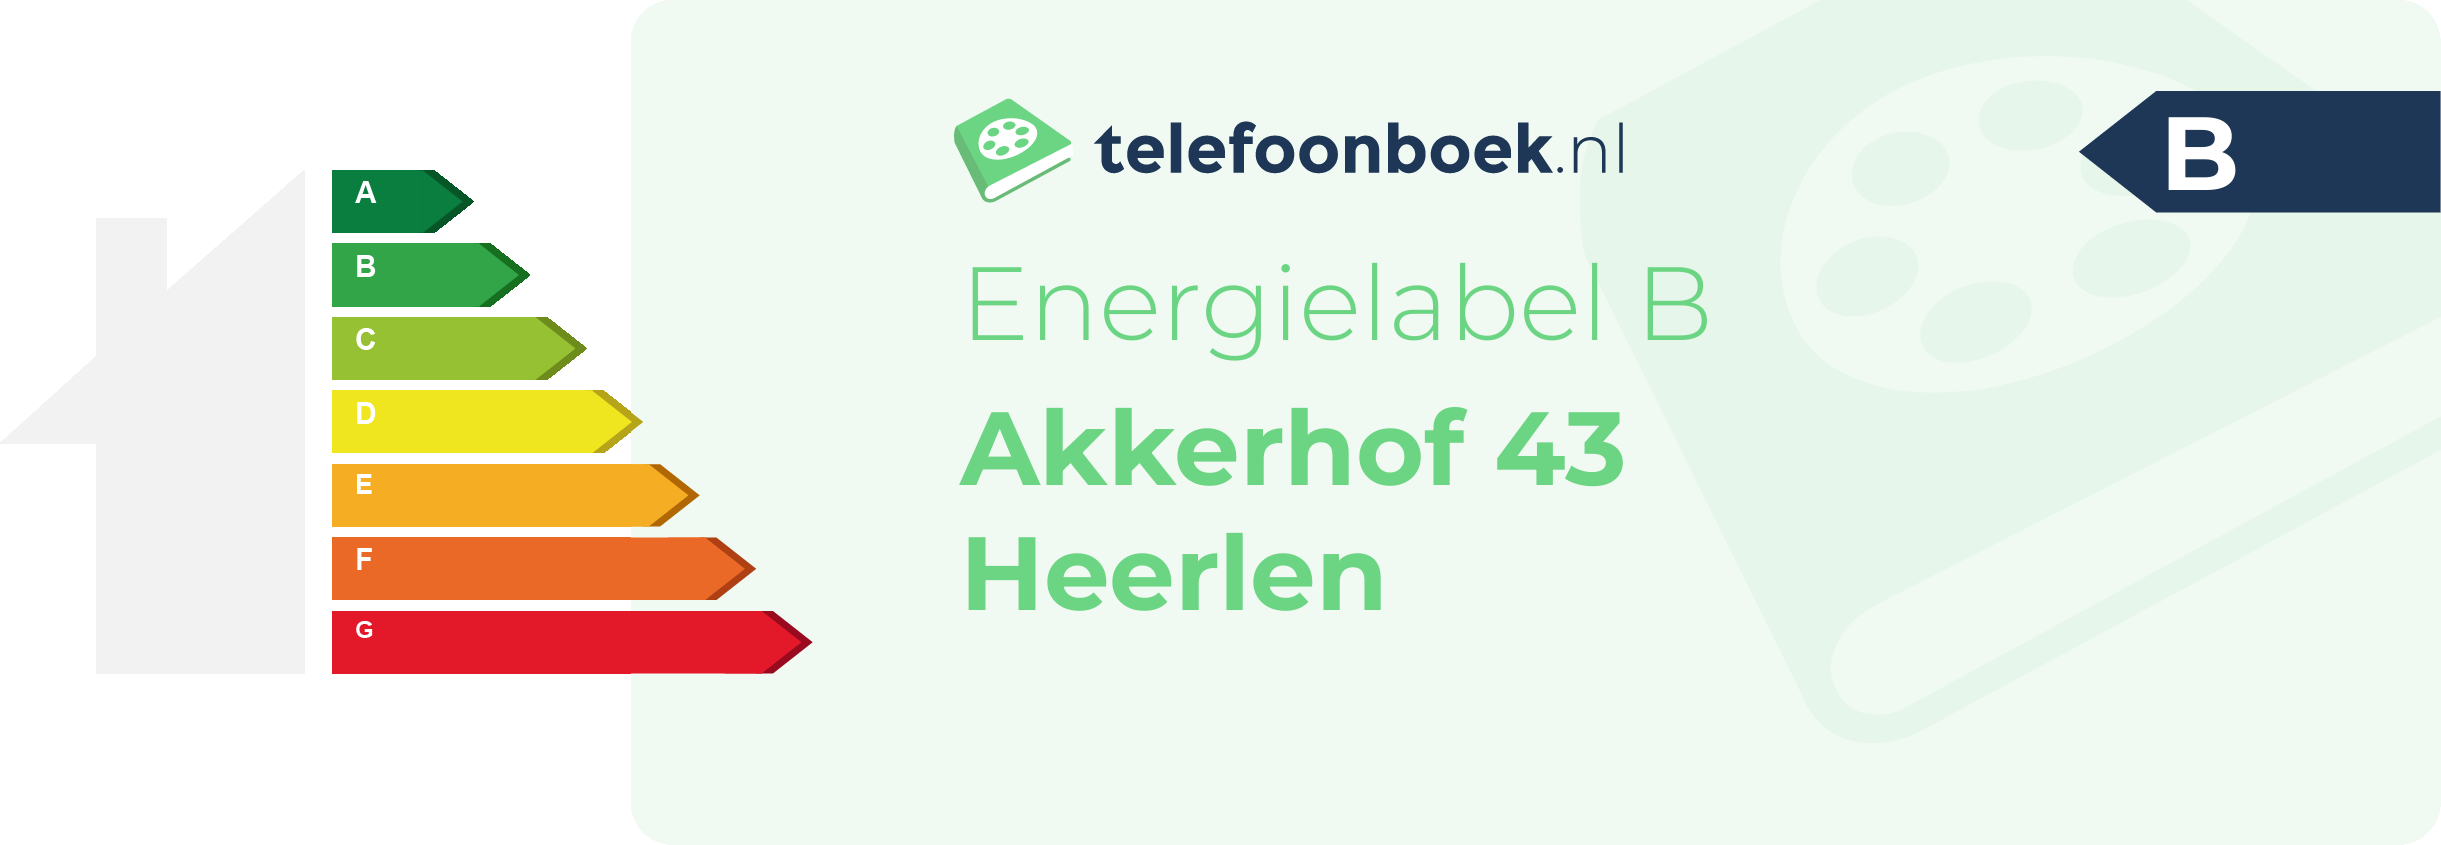 Energielabel Akkerhof 43 Heerlen